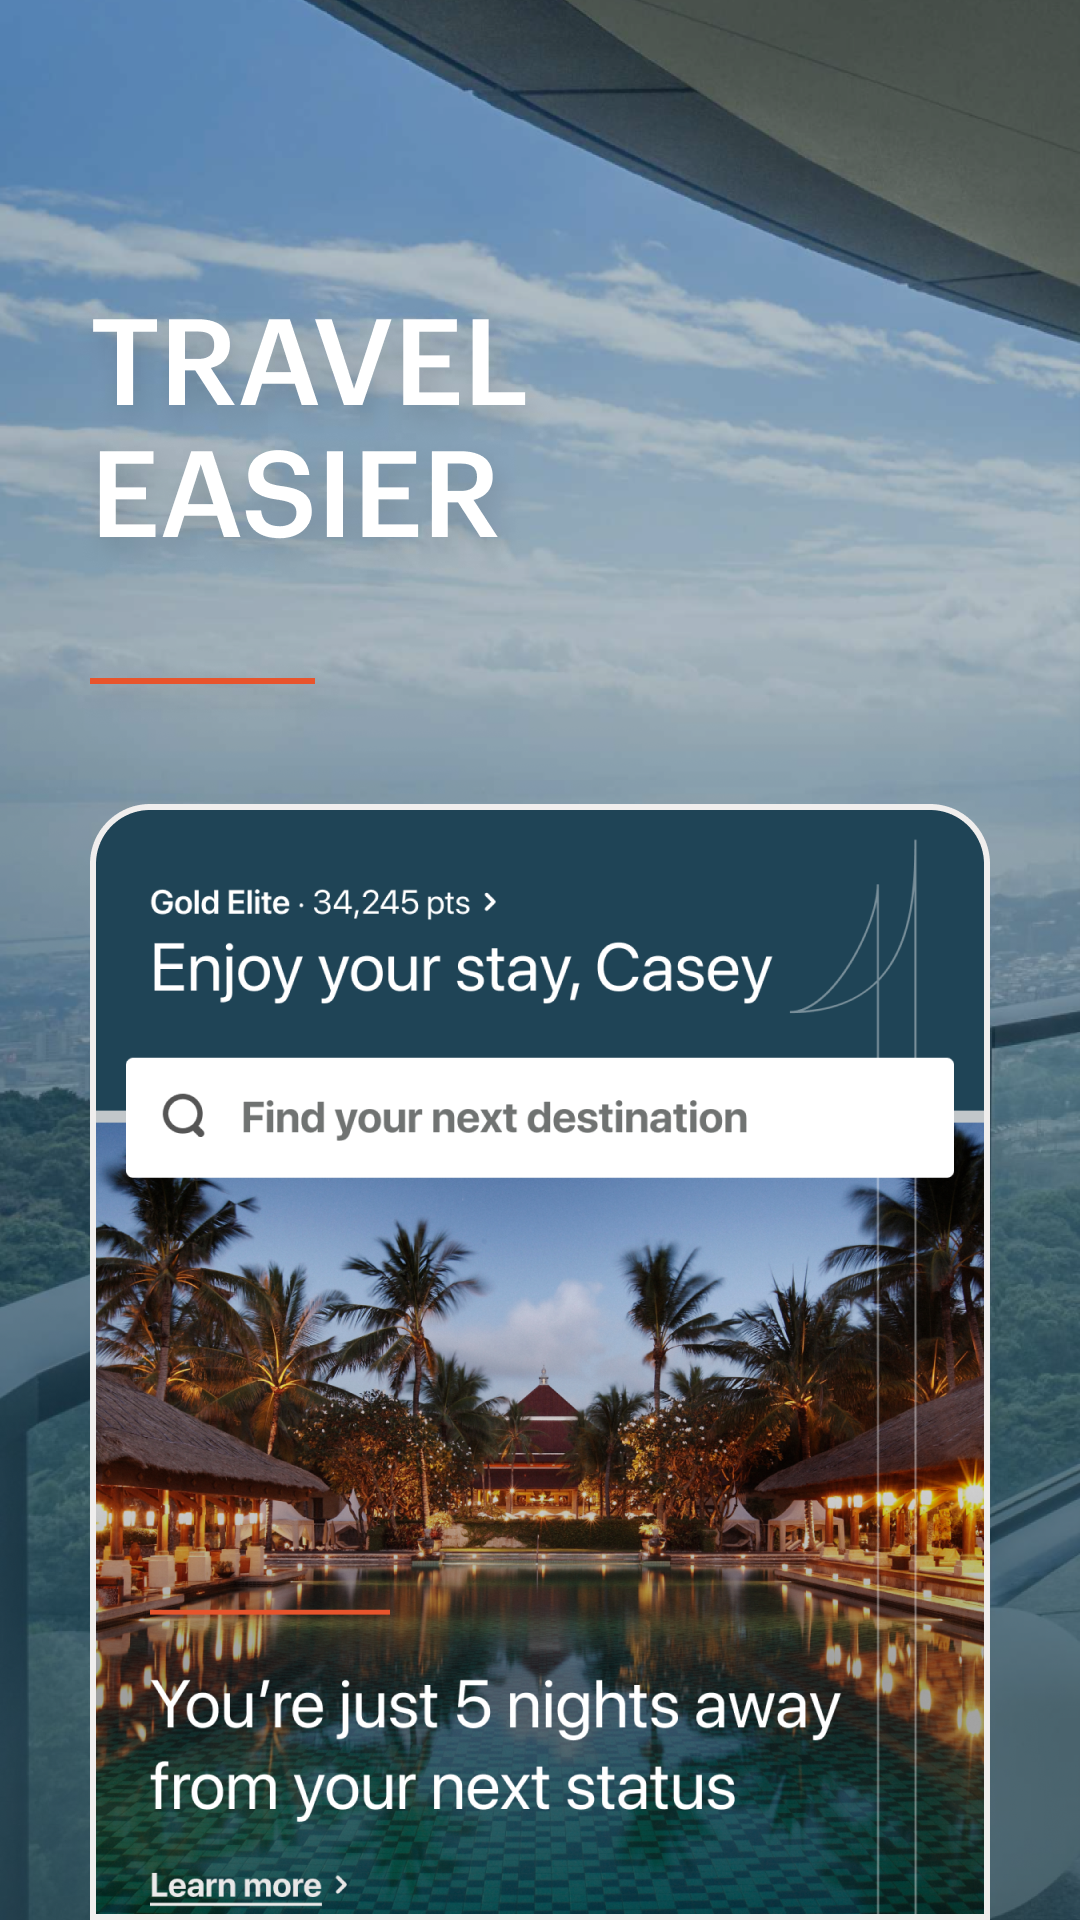 Android application IHG Hotels & Rewards screenshort